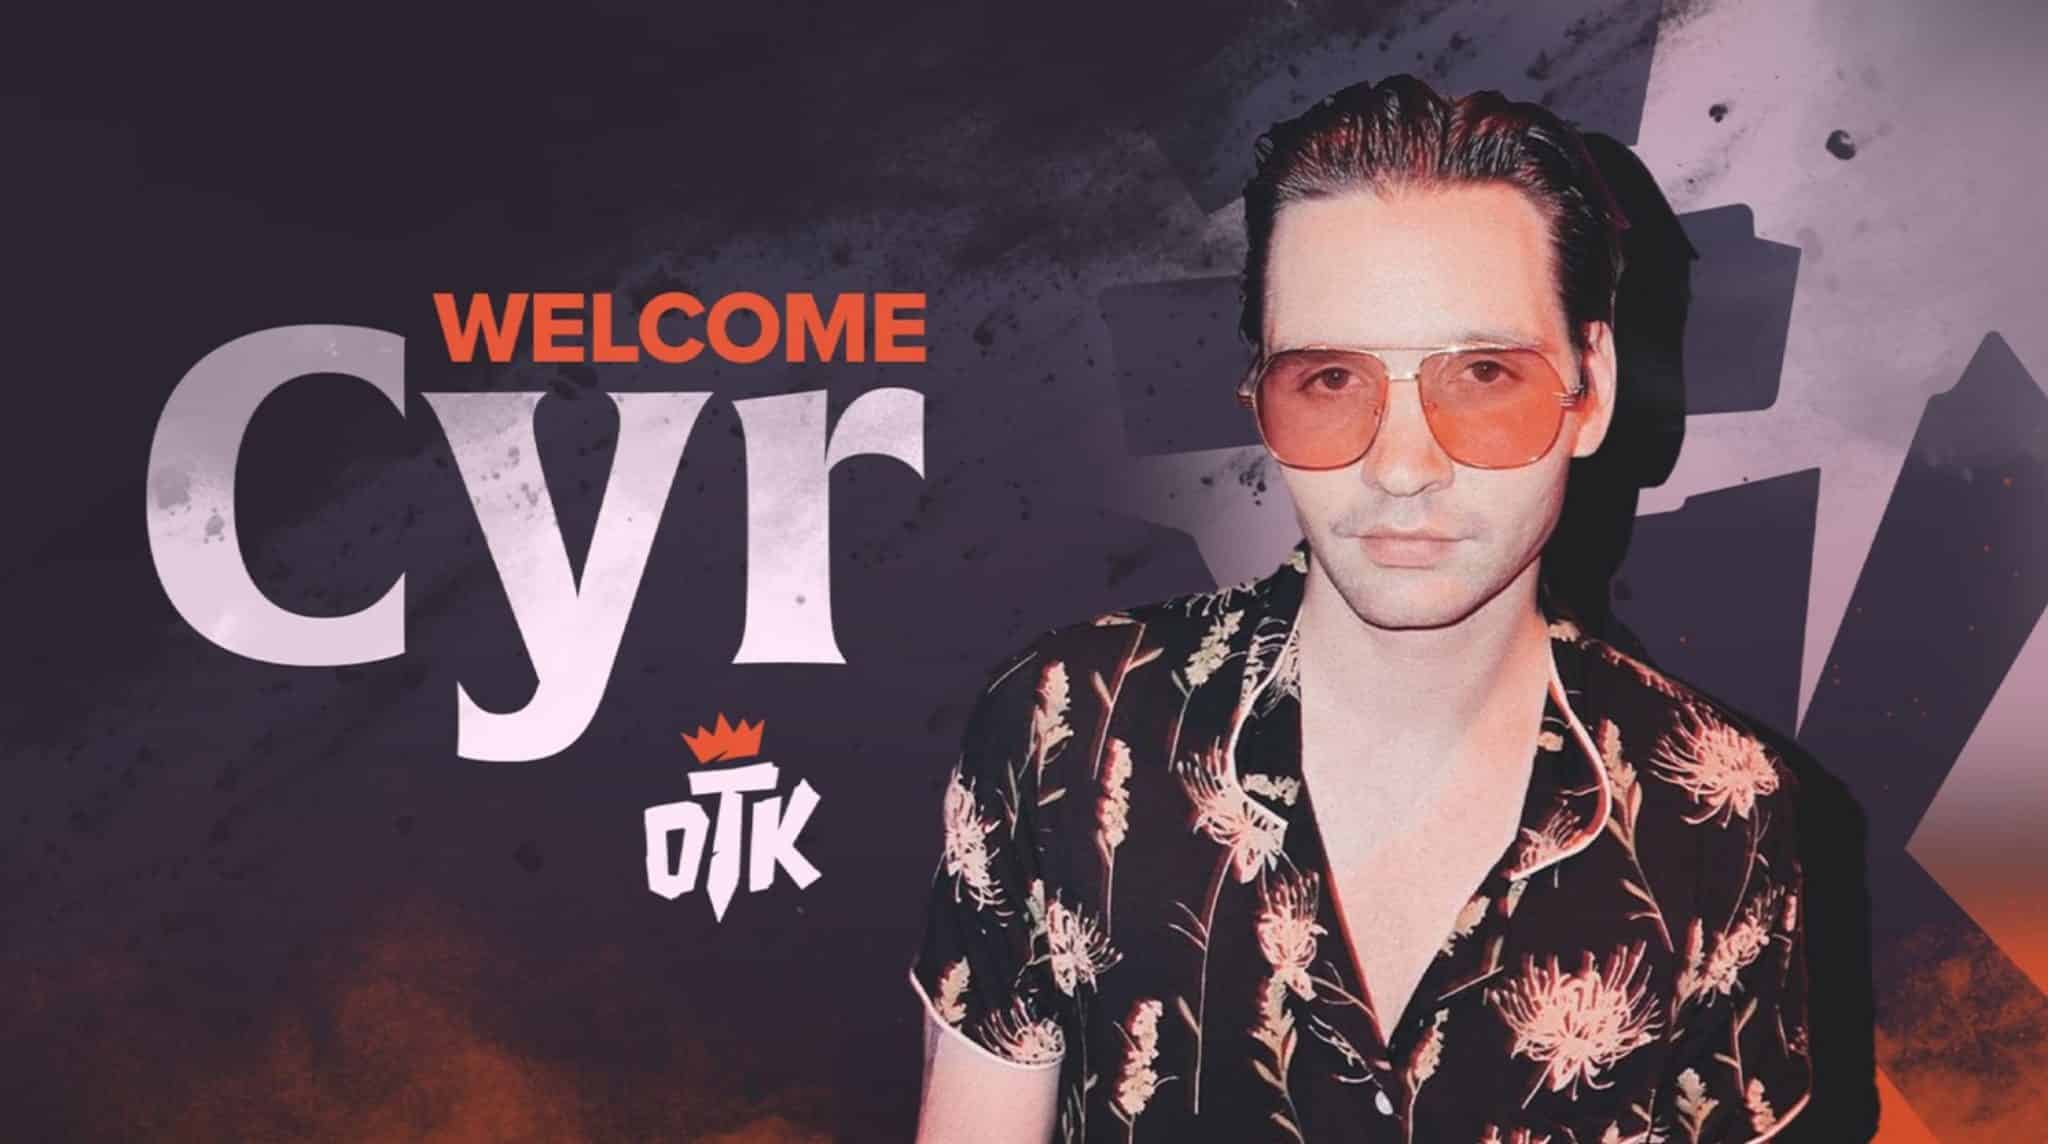 Cyr joins OTK announcement